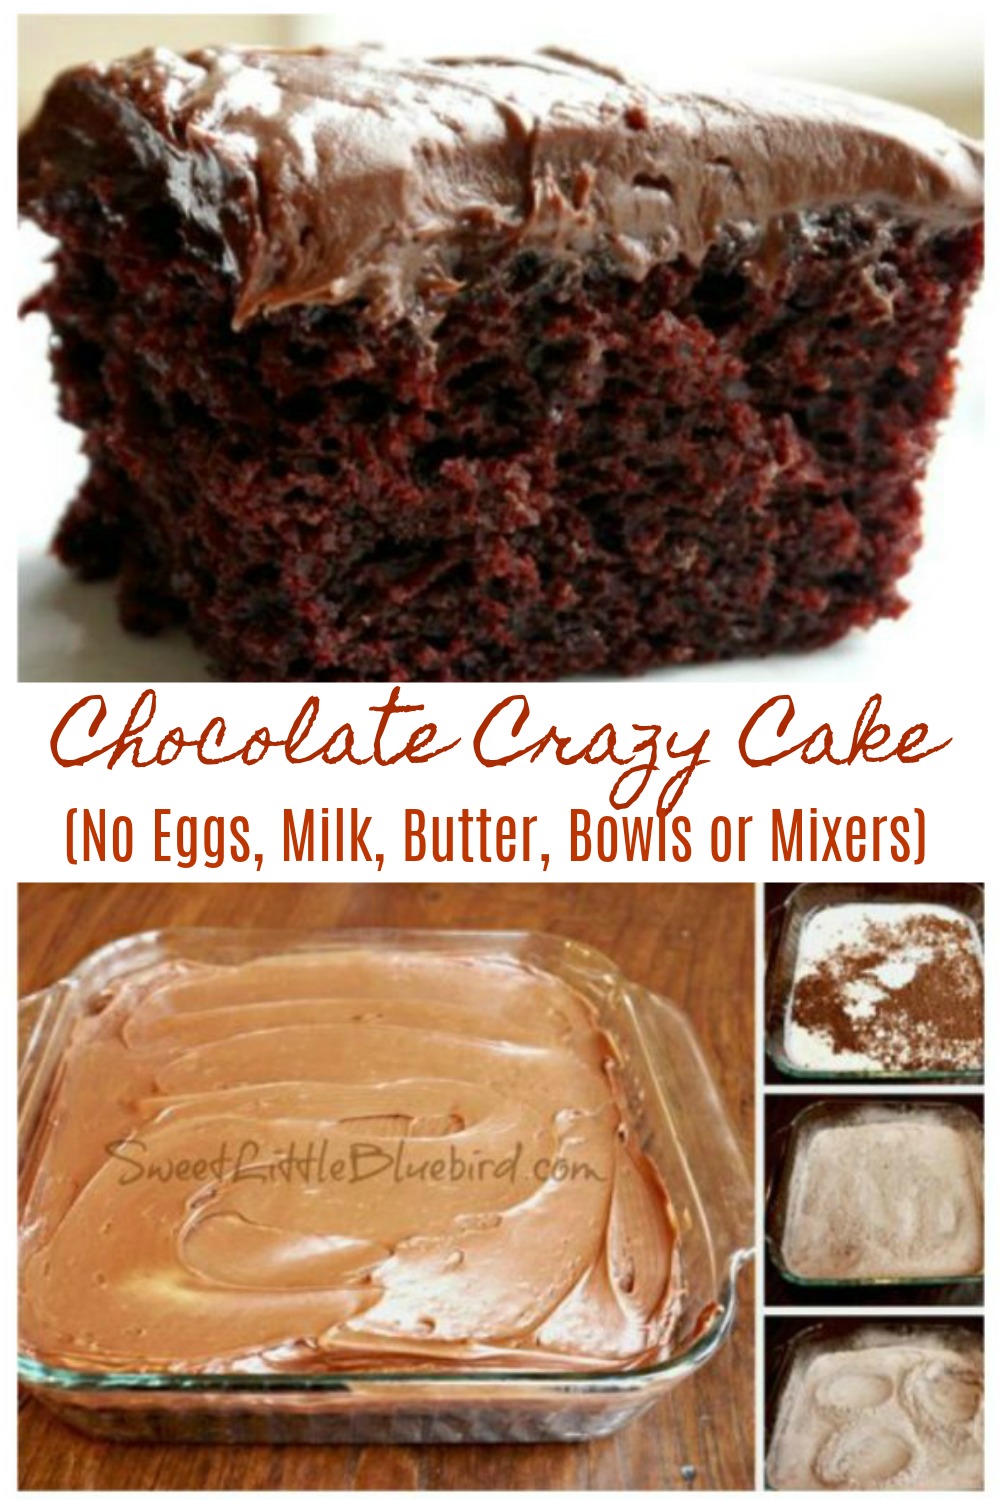 CHOCOLATE CRAZY CAKE - No Eggs, Milk Butter, Bowls or Mixers! Sweet Little Bluebird